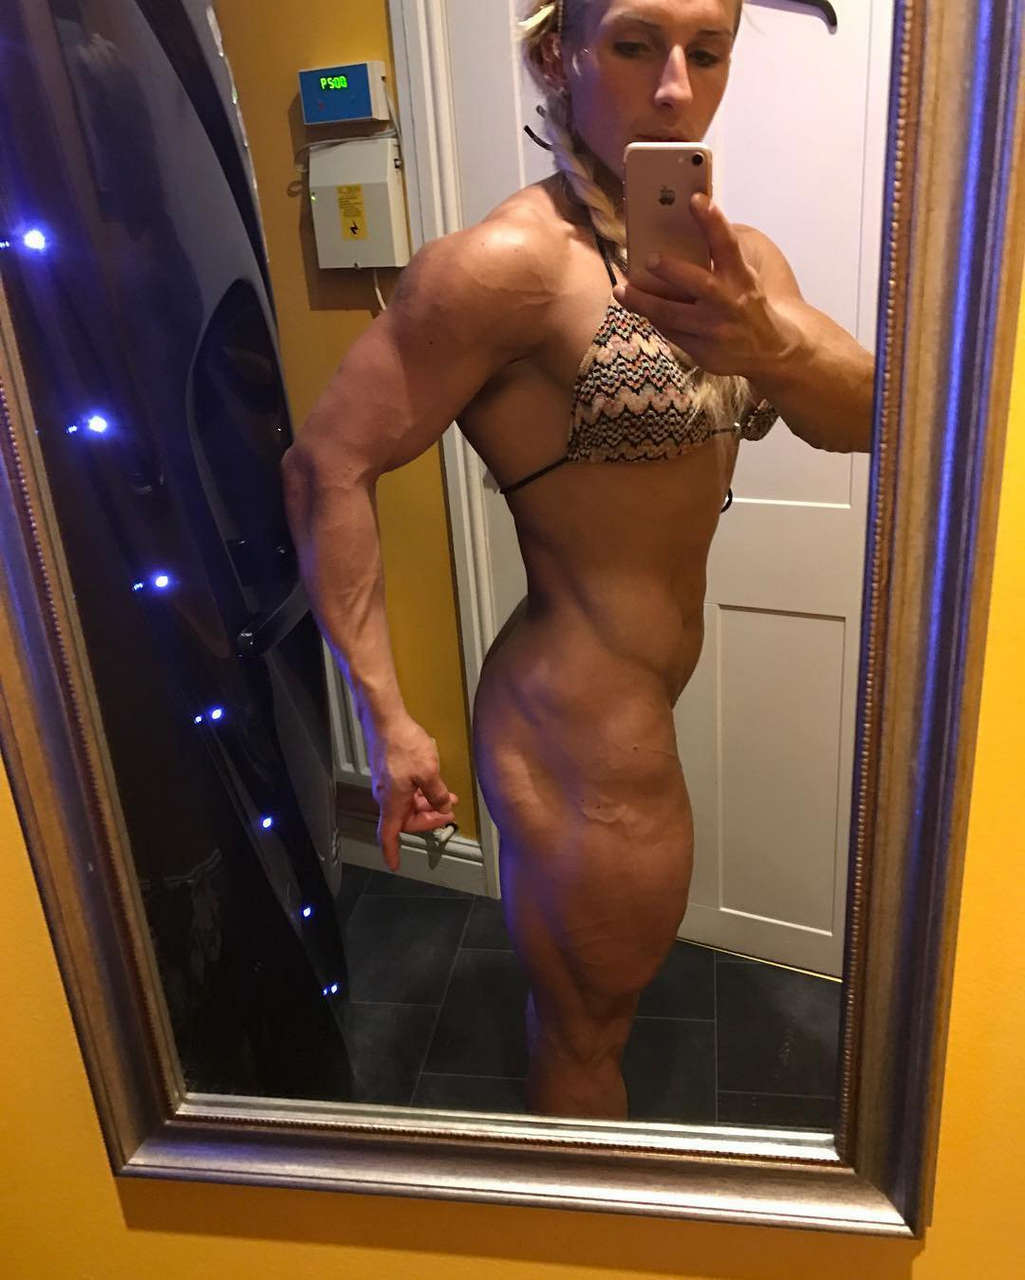 Corinne Ingman Muscles